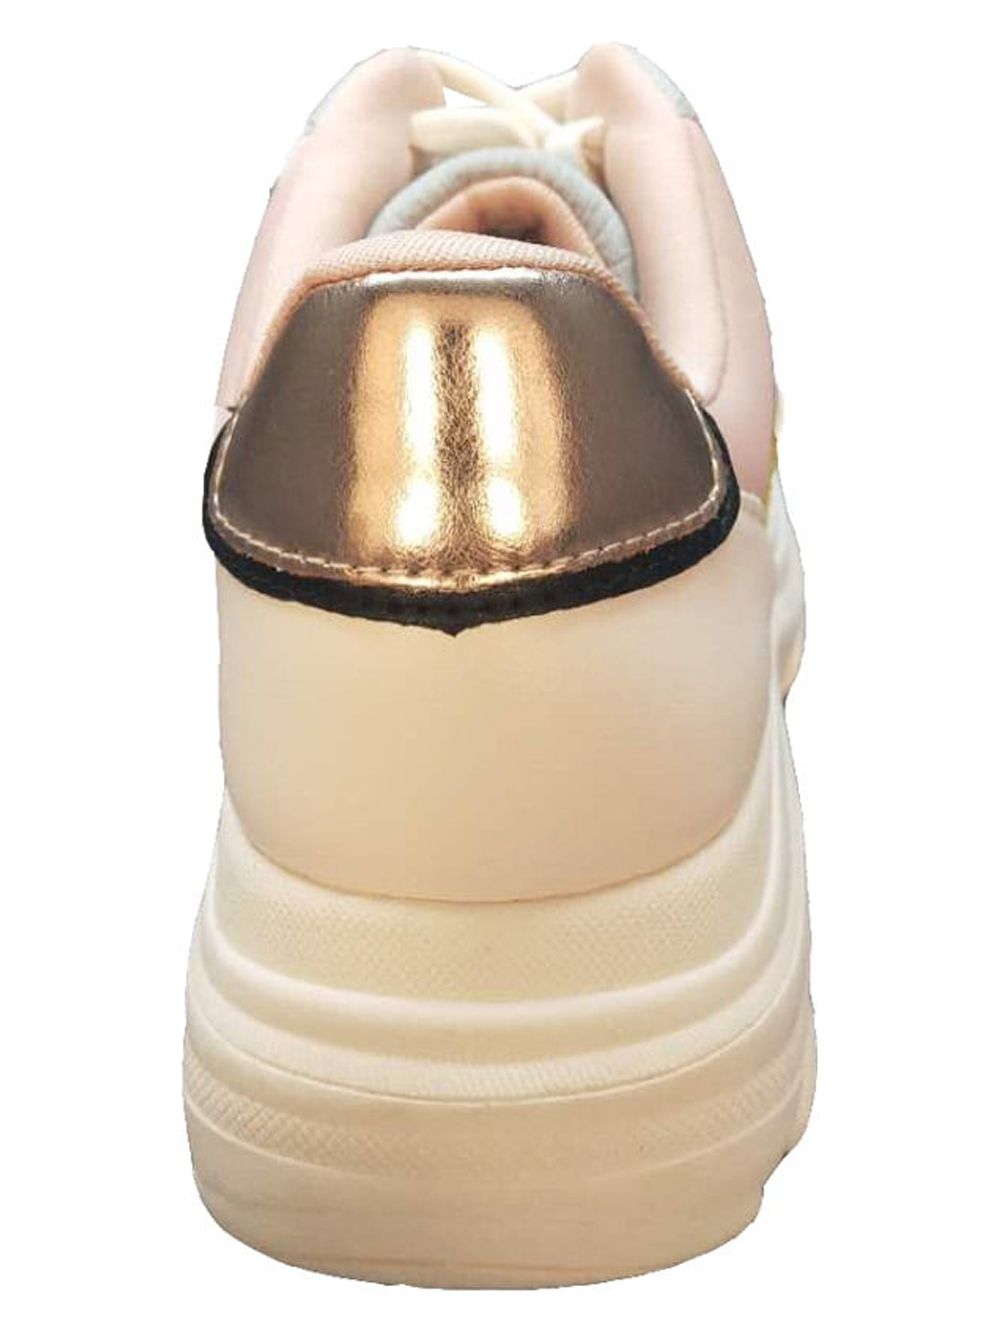 Women Big Buddha Molded Sneaker - image 4 of 4